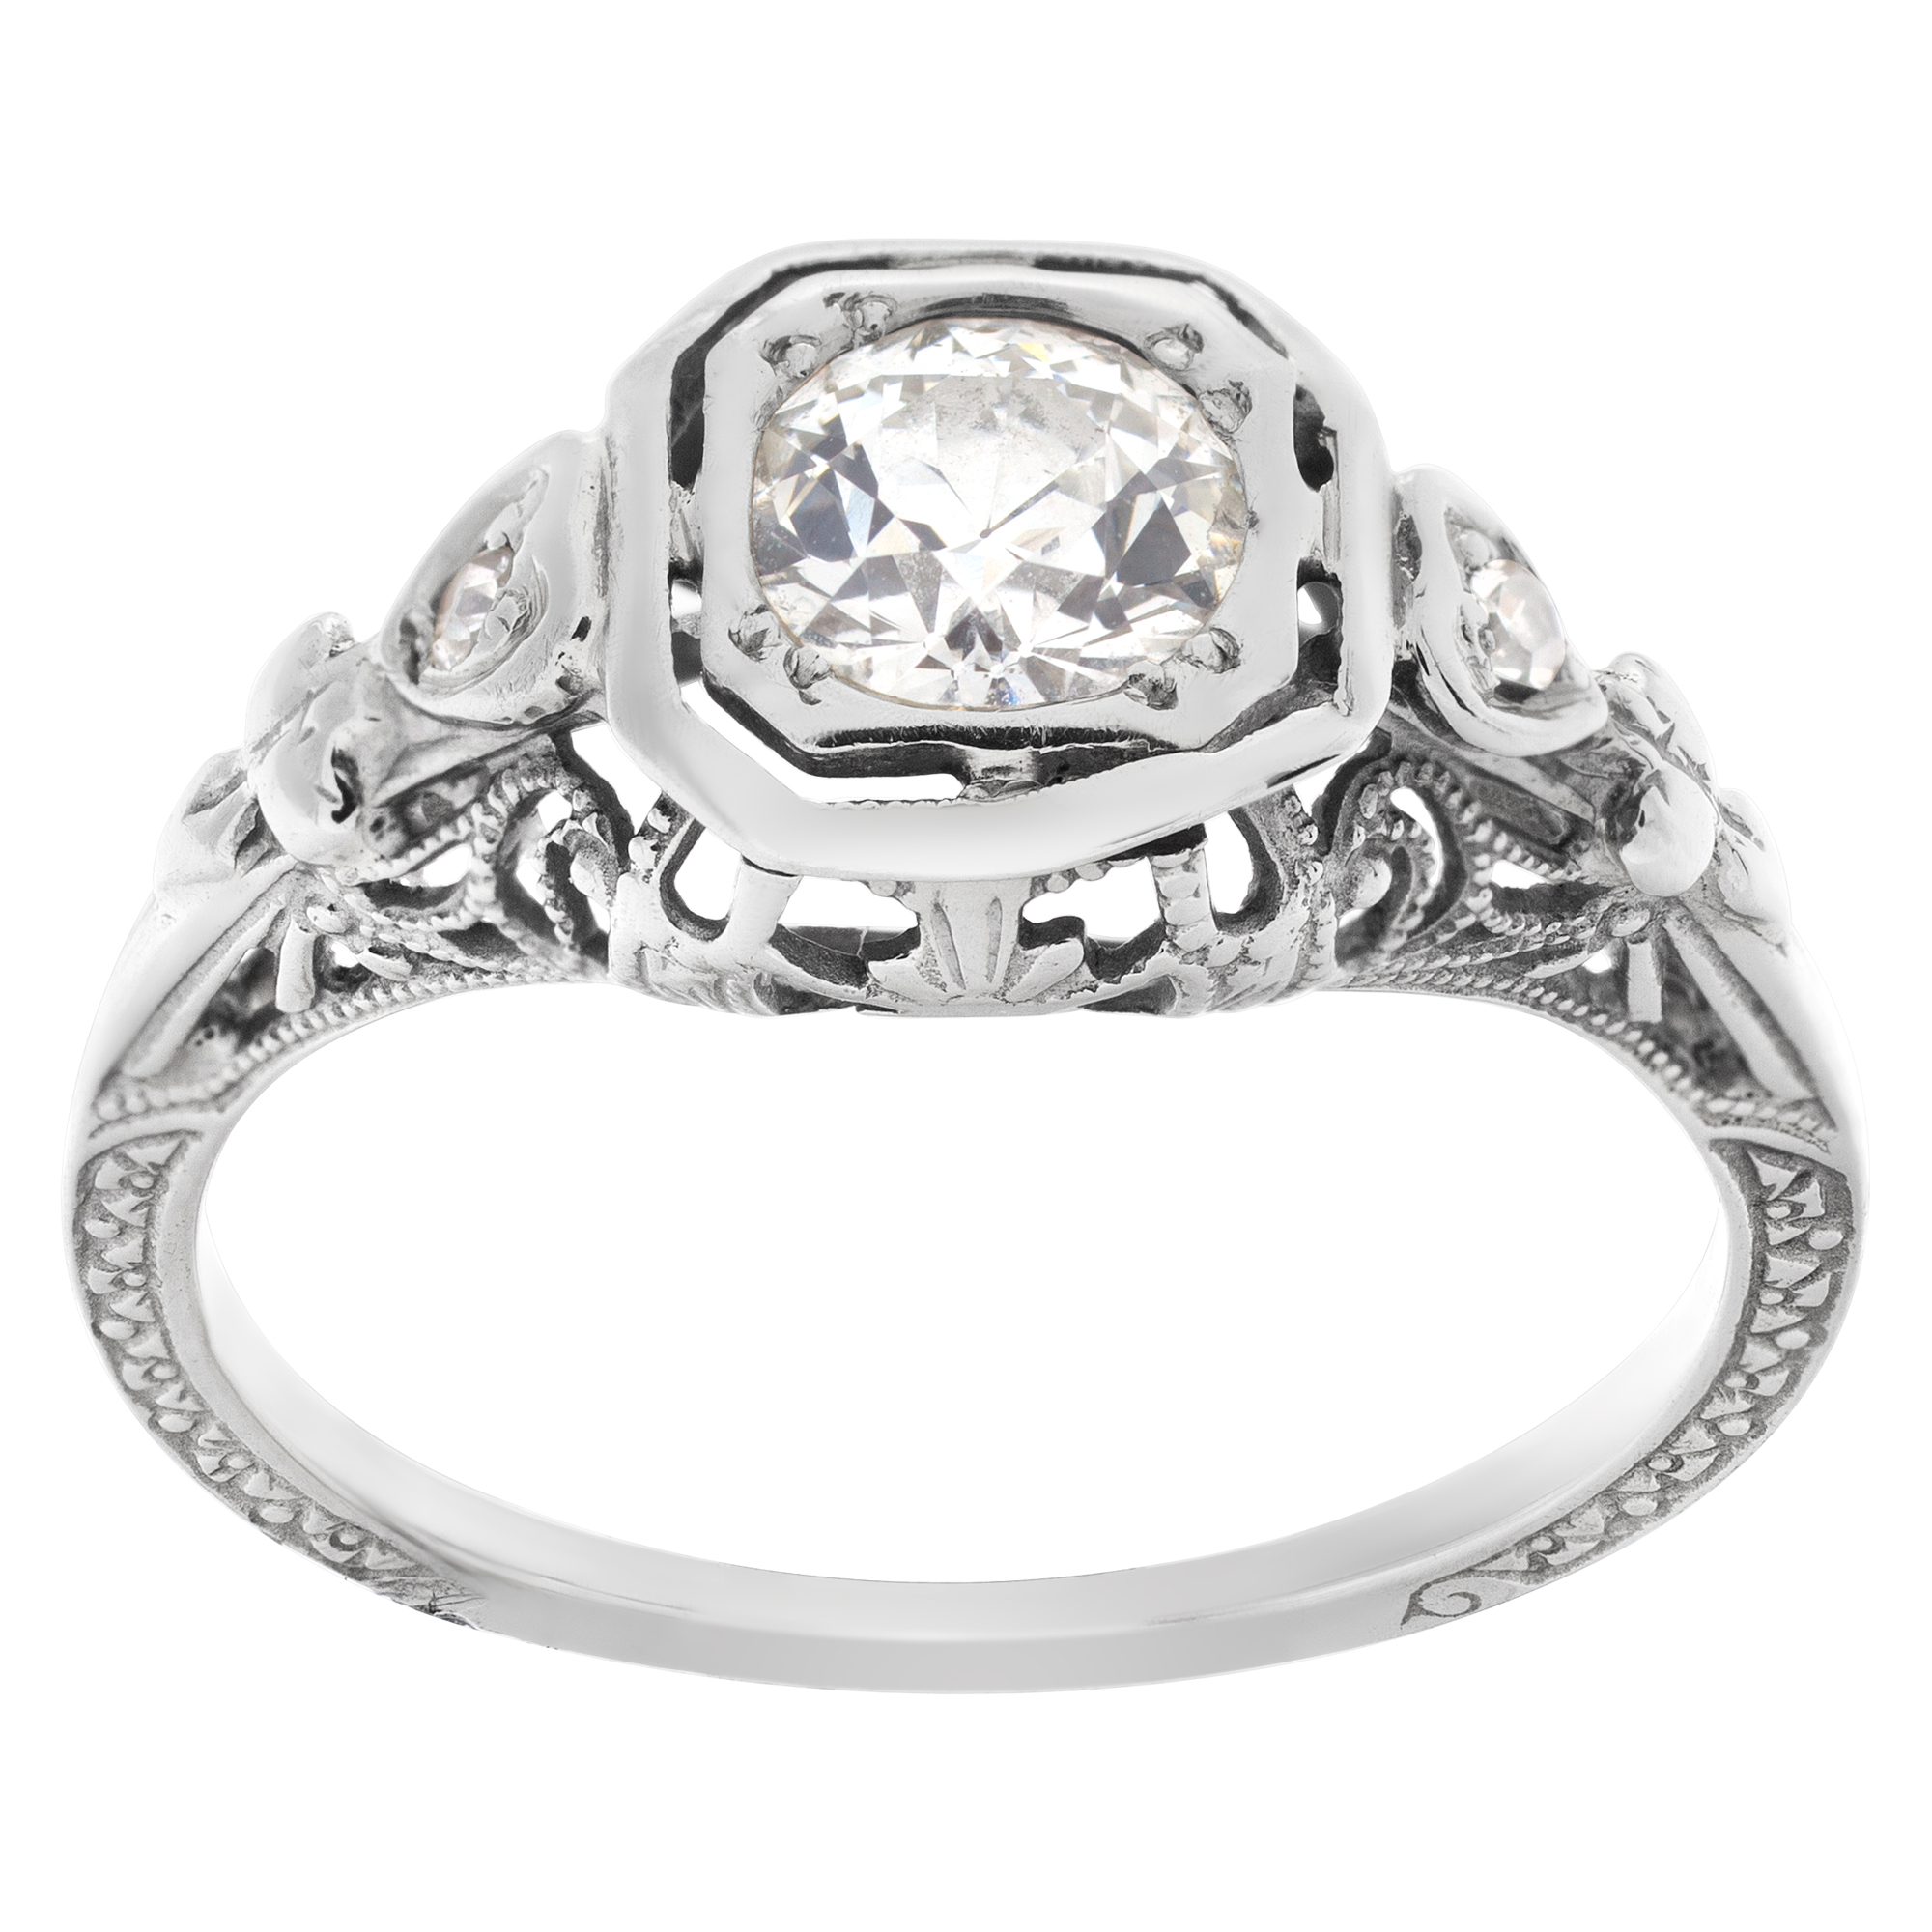 Vintage diamond ring in 14k white gold